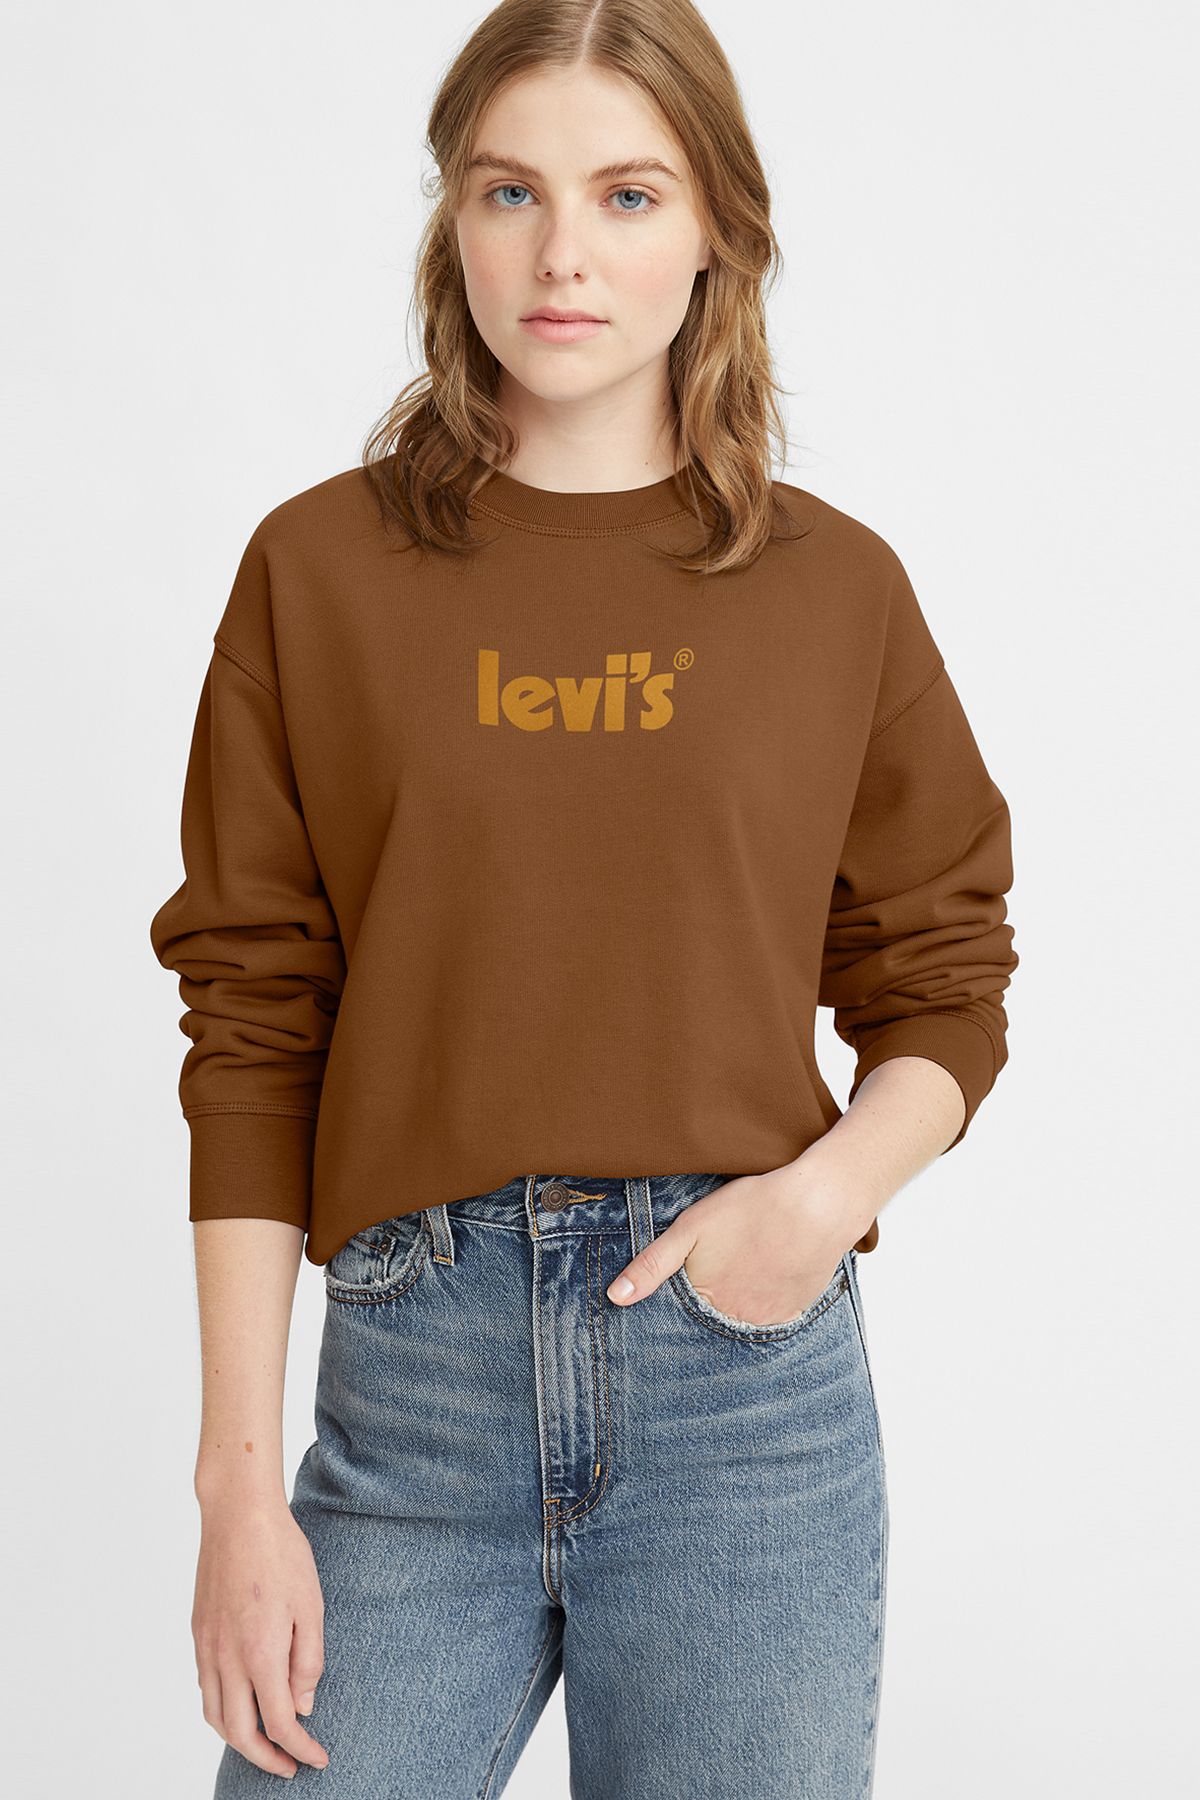 Levi's Â® Graphic Standard Crew Crew Seasonal Post Brown Women Sweatshirts